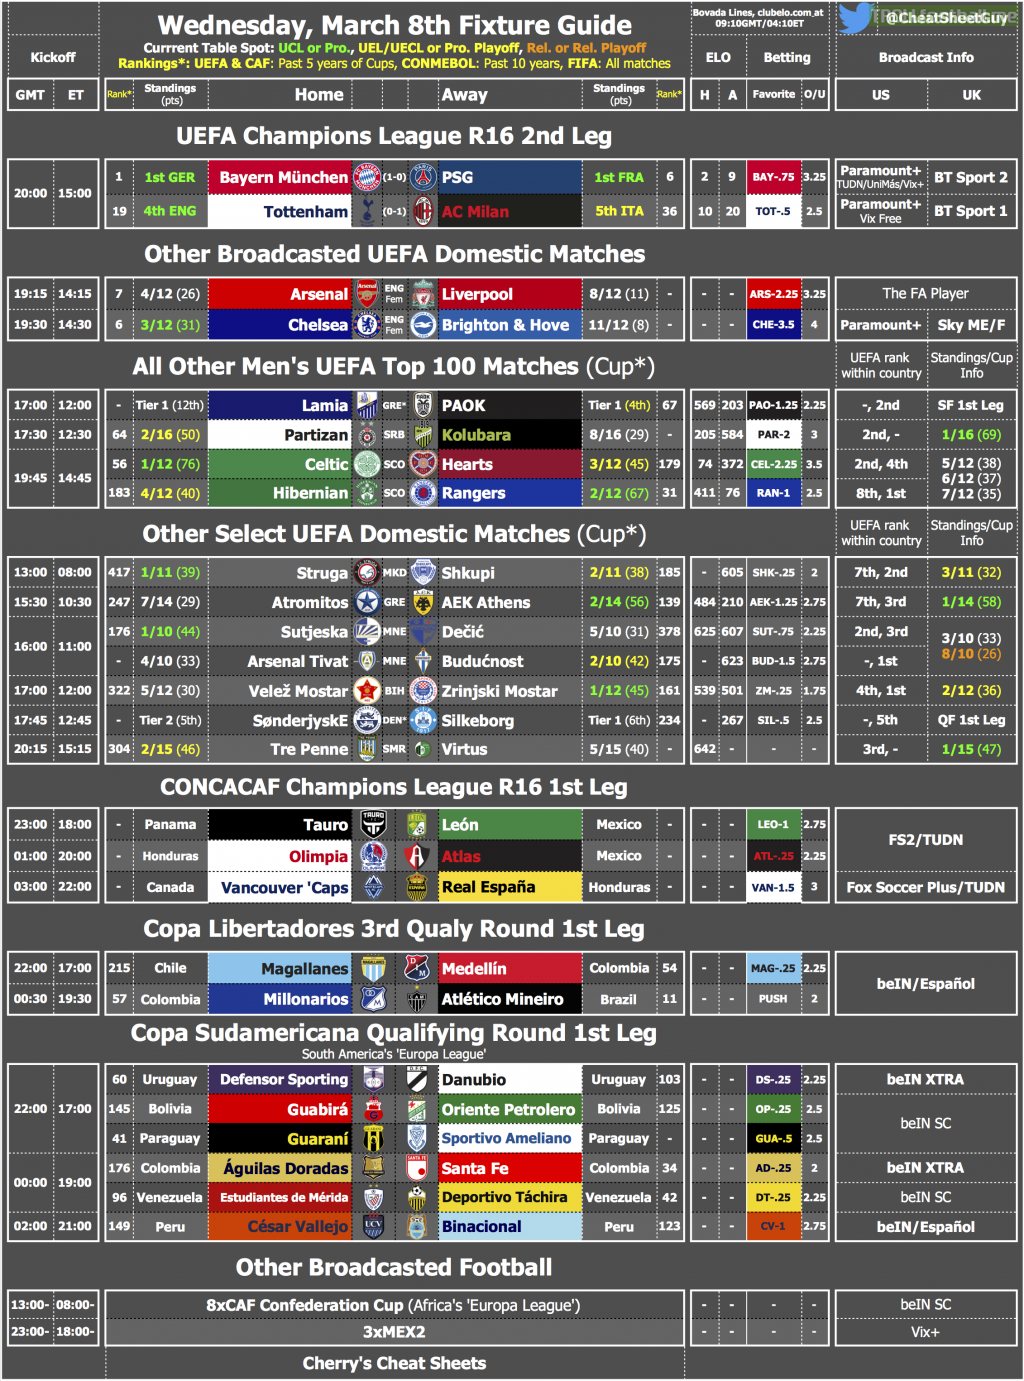 Wednesday's Fixture & Broadcast Cheat Sheet [OC]